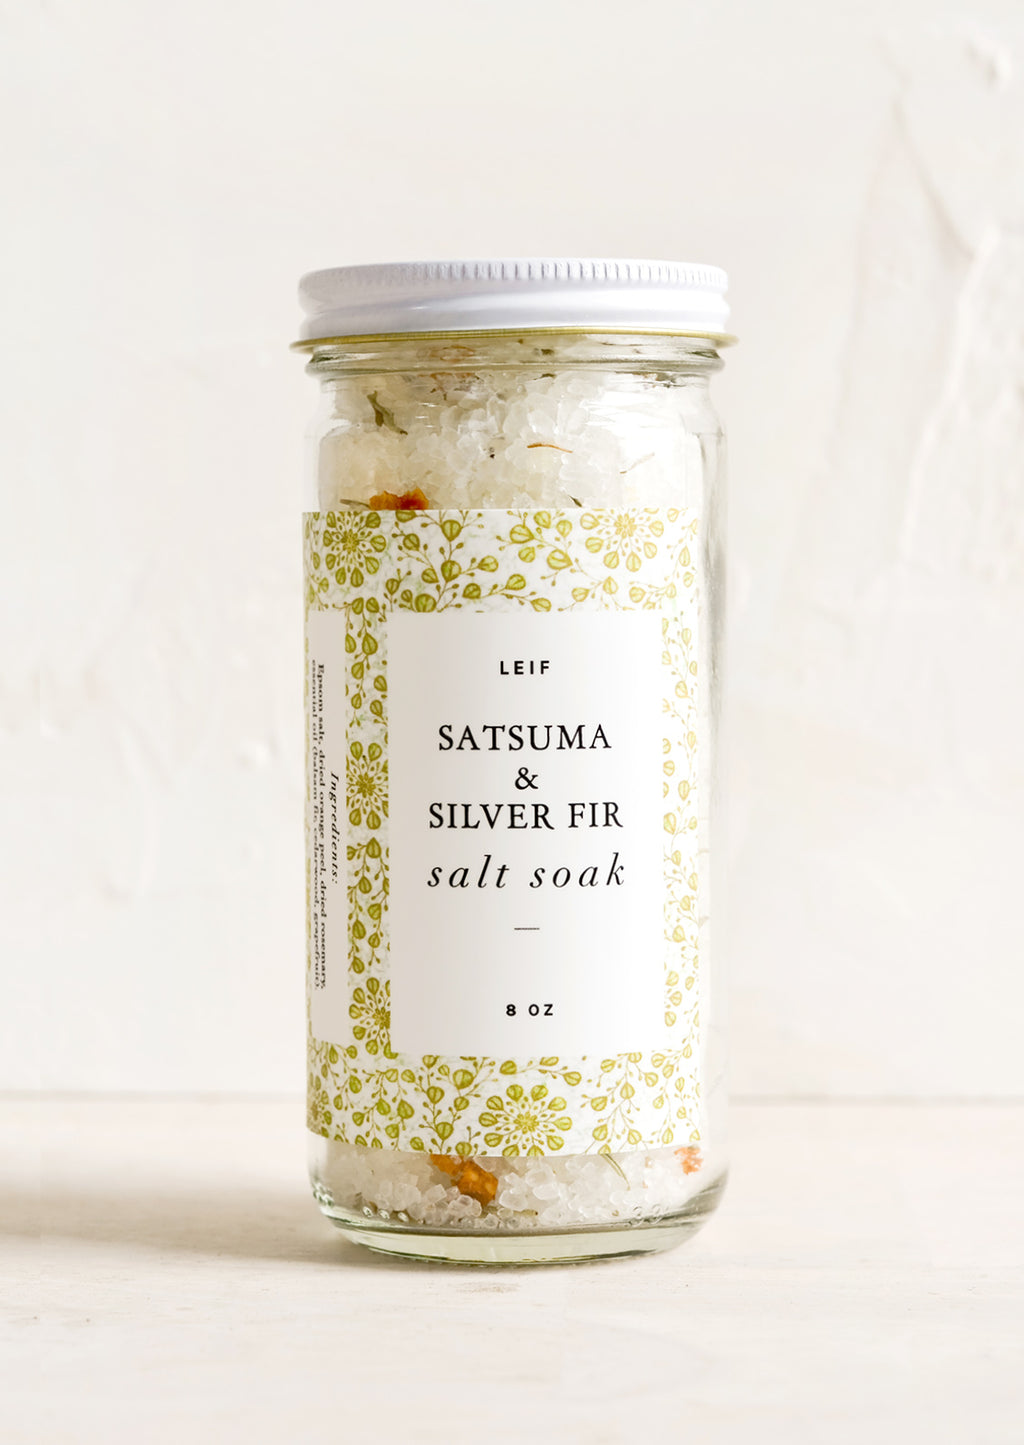 Satsuma & Silver Fir: A straight sided glass jar containing Satsuma & Silver Fir salt soak.